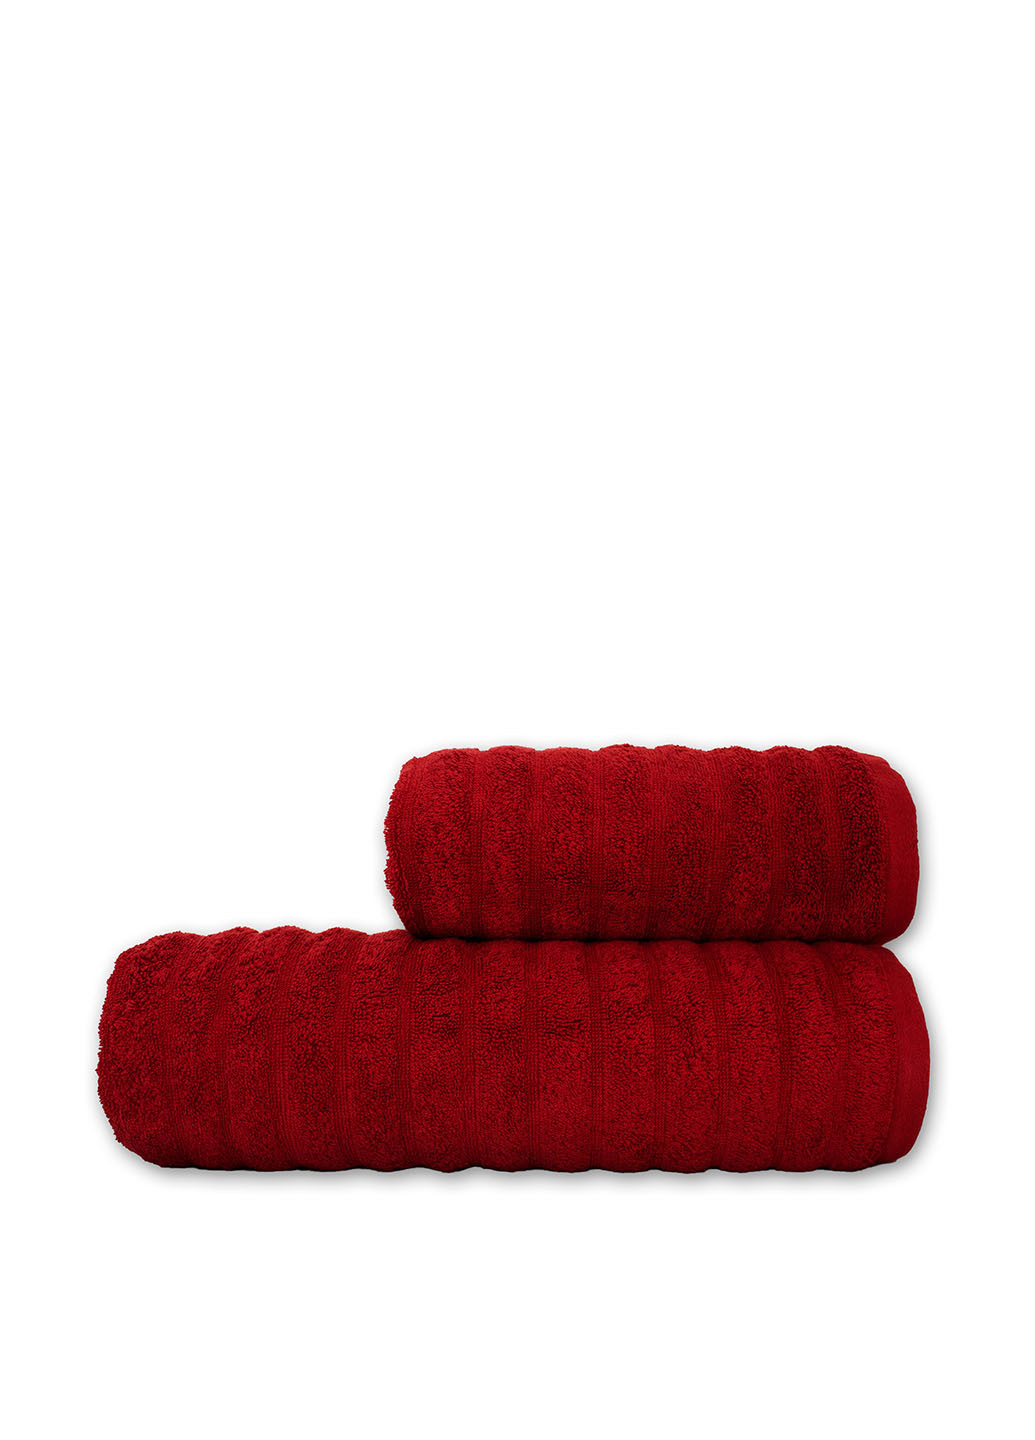 Romeo Soft полотенце, 50х90 см однотонный бордовый производство - Турция